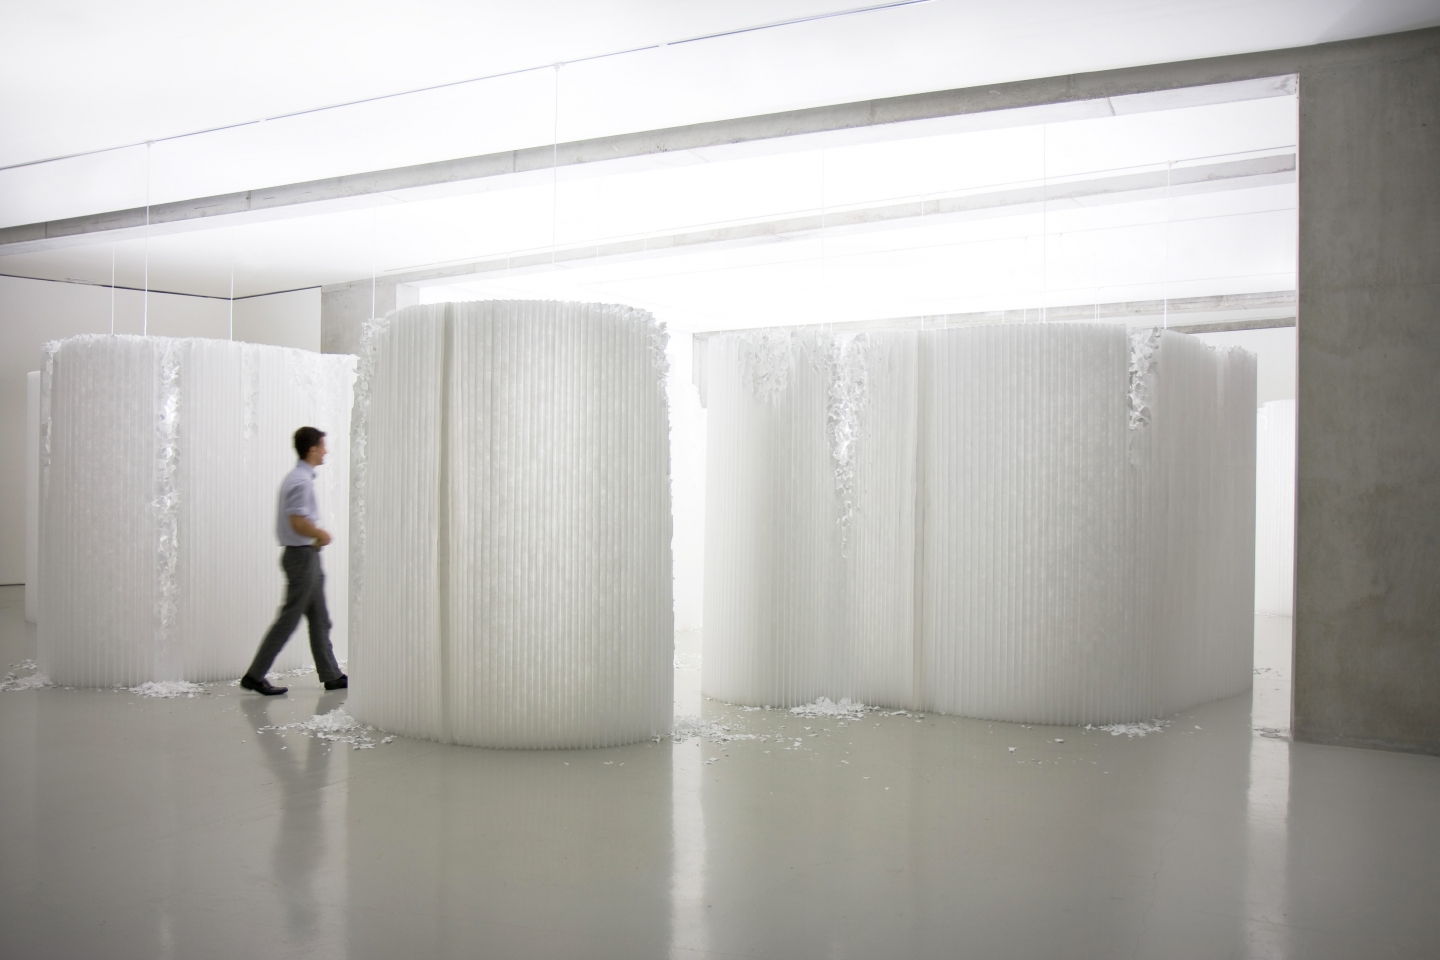 custom white textile softwalls at molo's installation 'delicate erosion: a study in light and ephemeral space' at the Centro de Arte Caja de Burgos in Spain